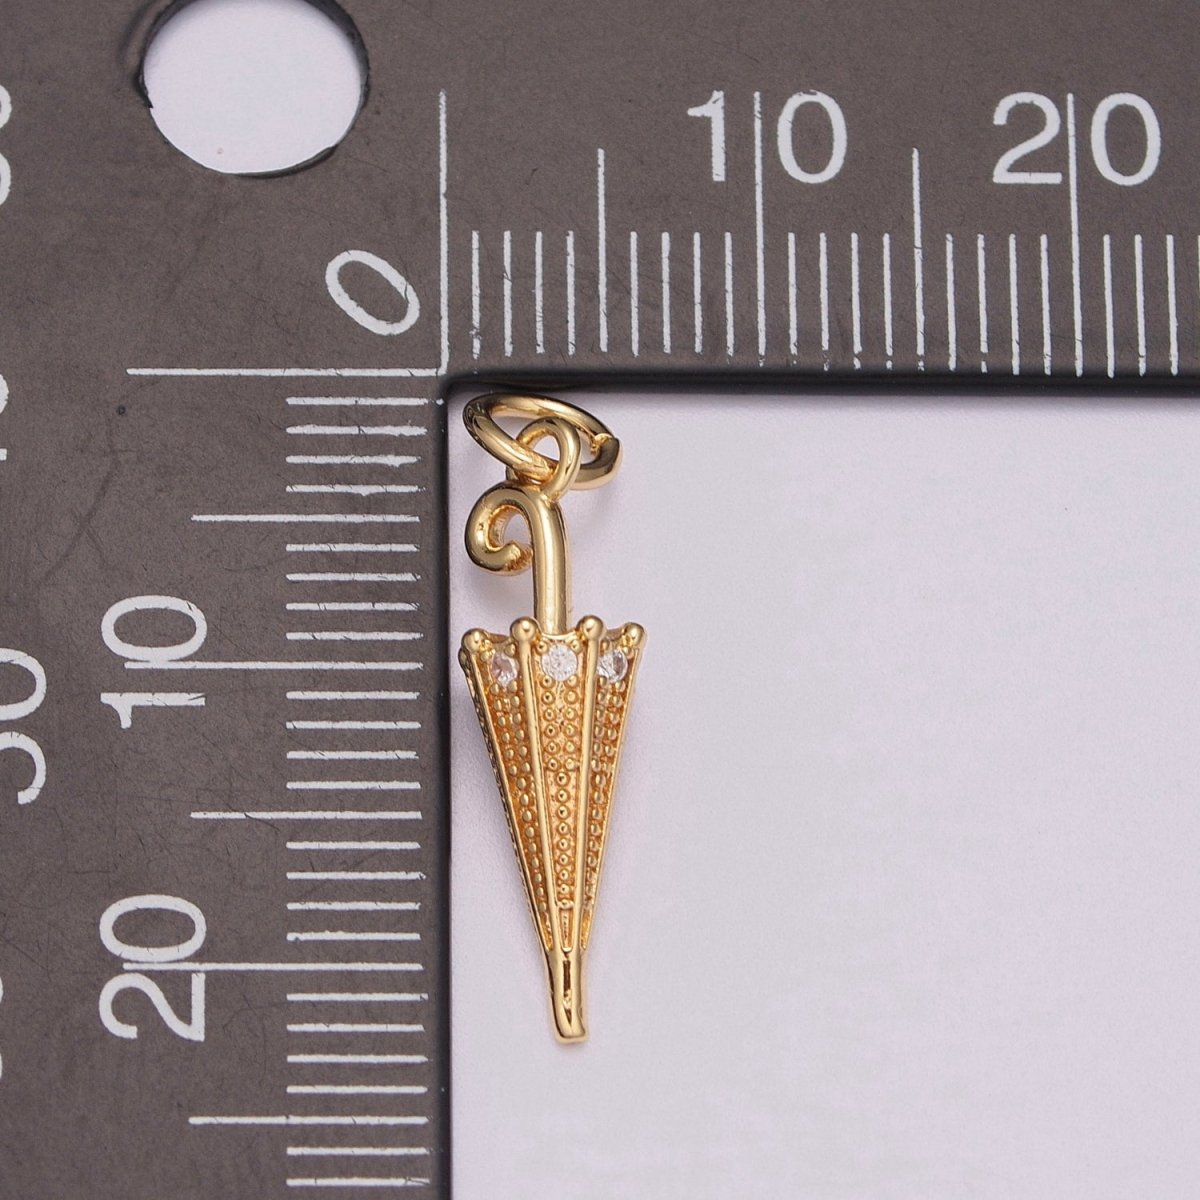 18k Gold Filled Umbrella Charm Small Umbrella Necklace Bracelet Pendant DIY Jewelry Findings M-772 - DLUXCA